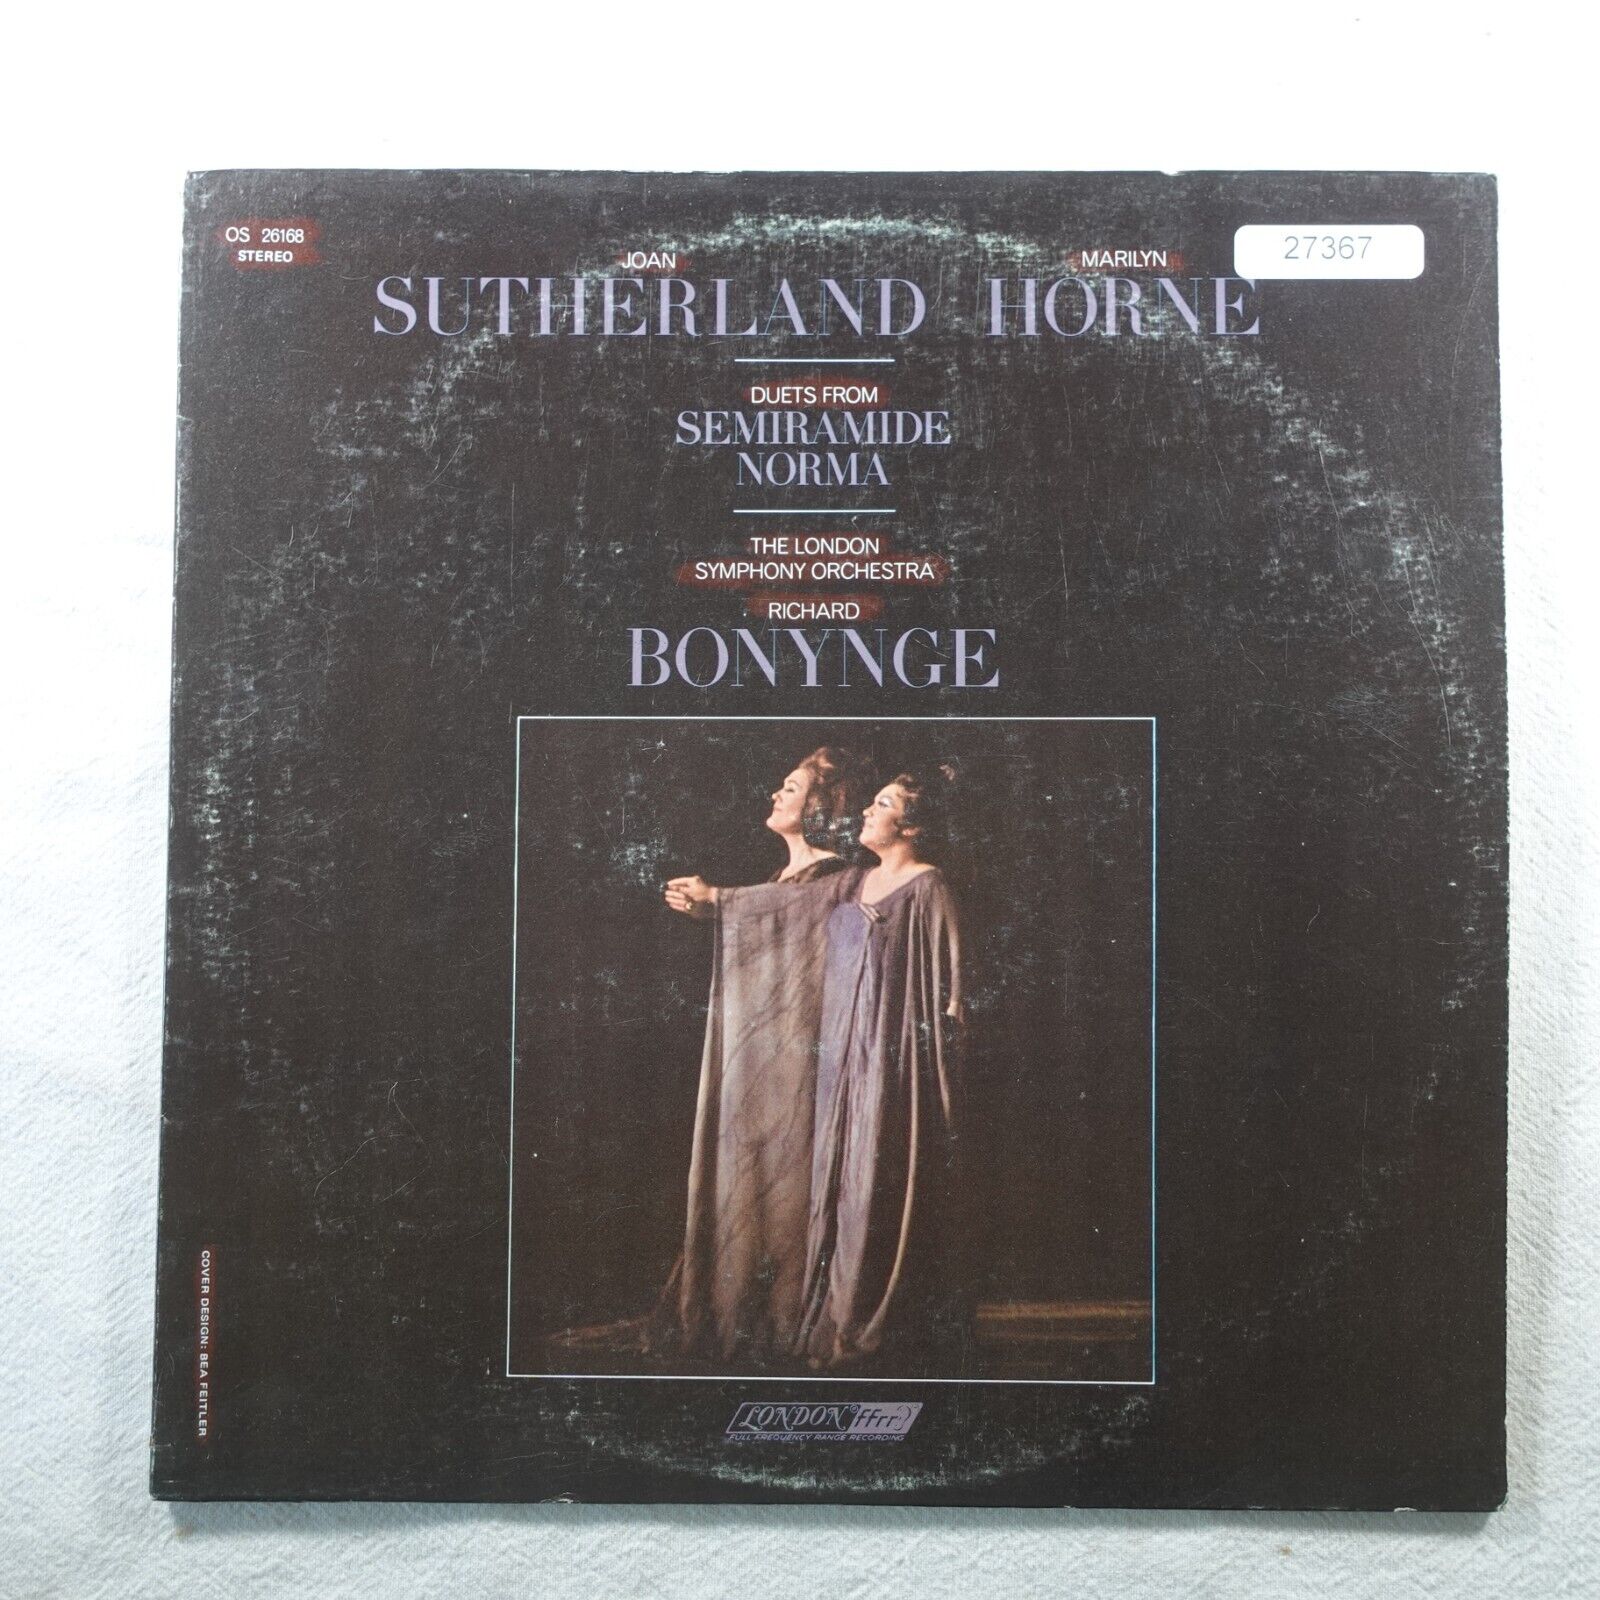 Joan Sutherland Duets From Semiramide Norma LP Vinyl Record Album